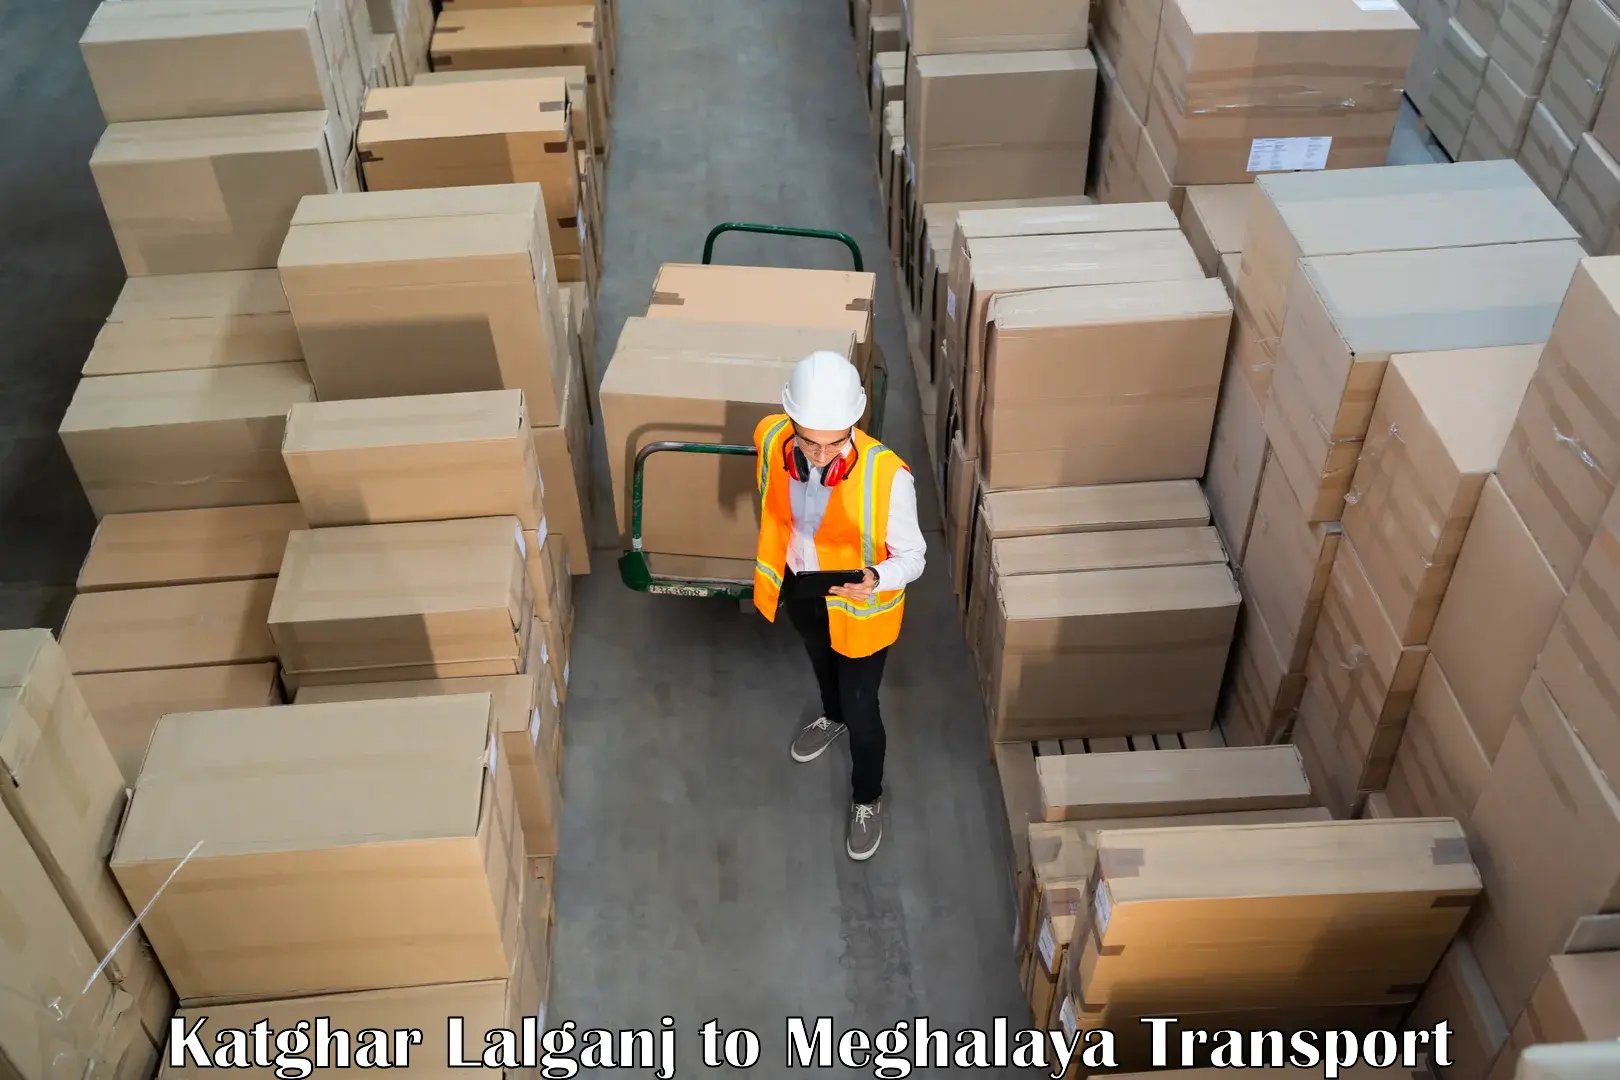 Truck transport companies in India Katghar Lalganj to Shillong